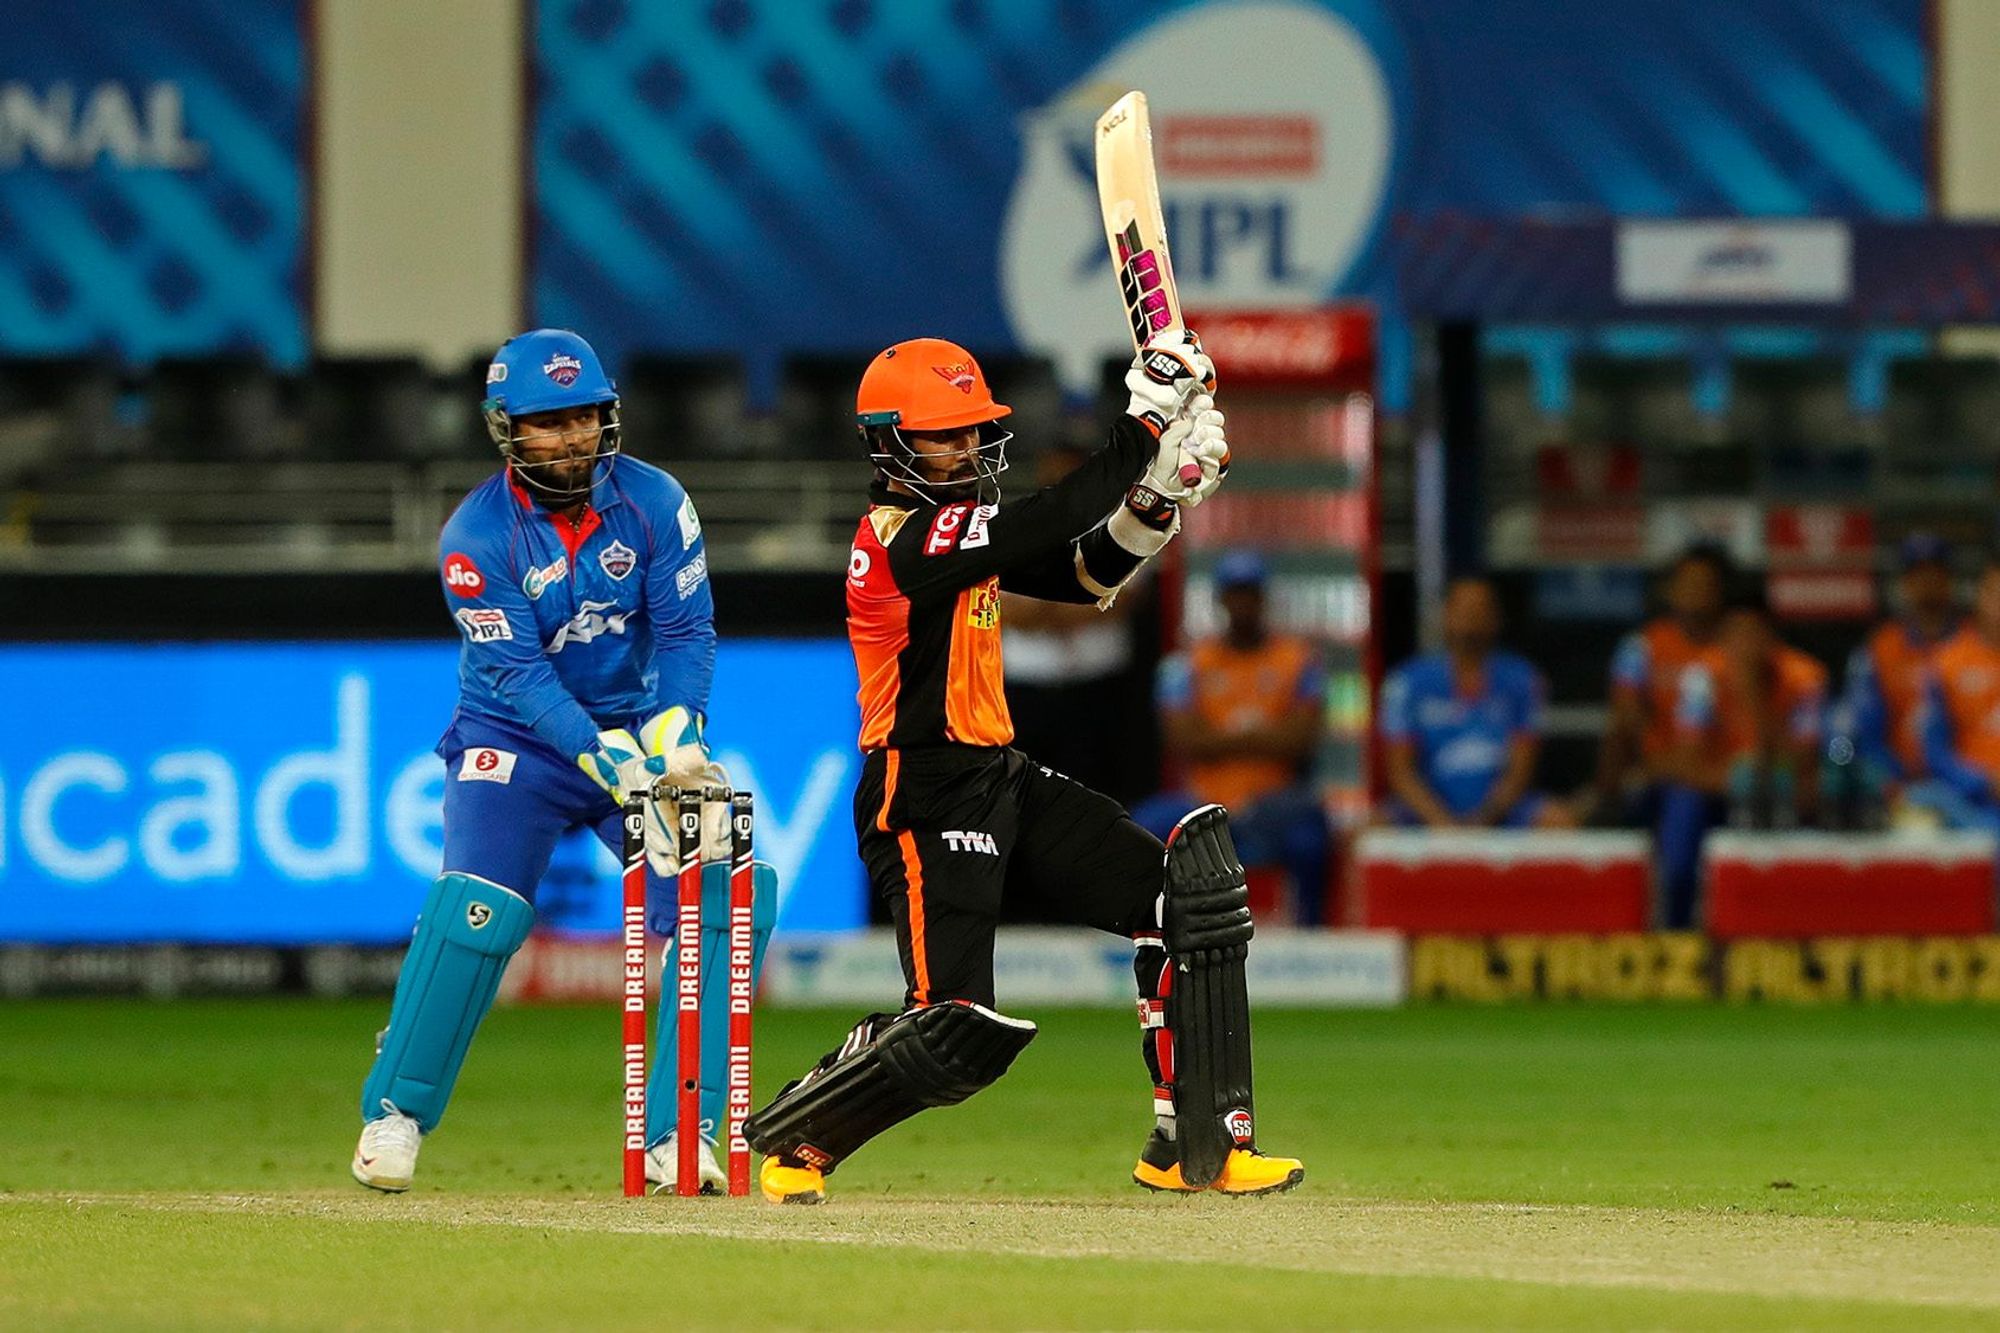 DC bowlers had no answers to Saha's firepower in Dubai | BCCI/IPL